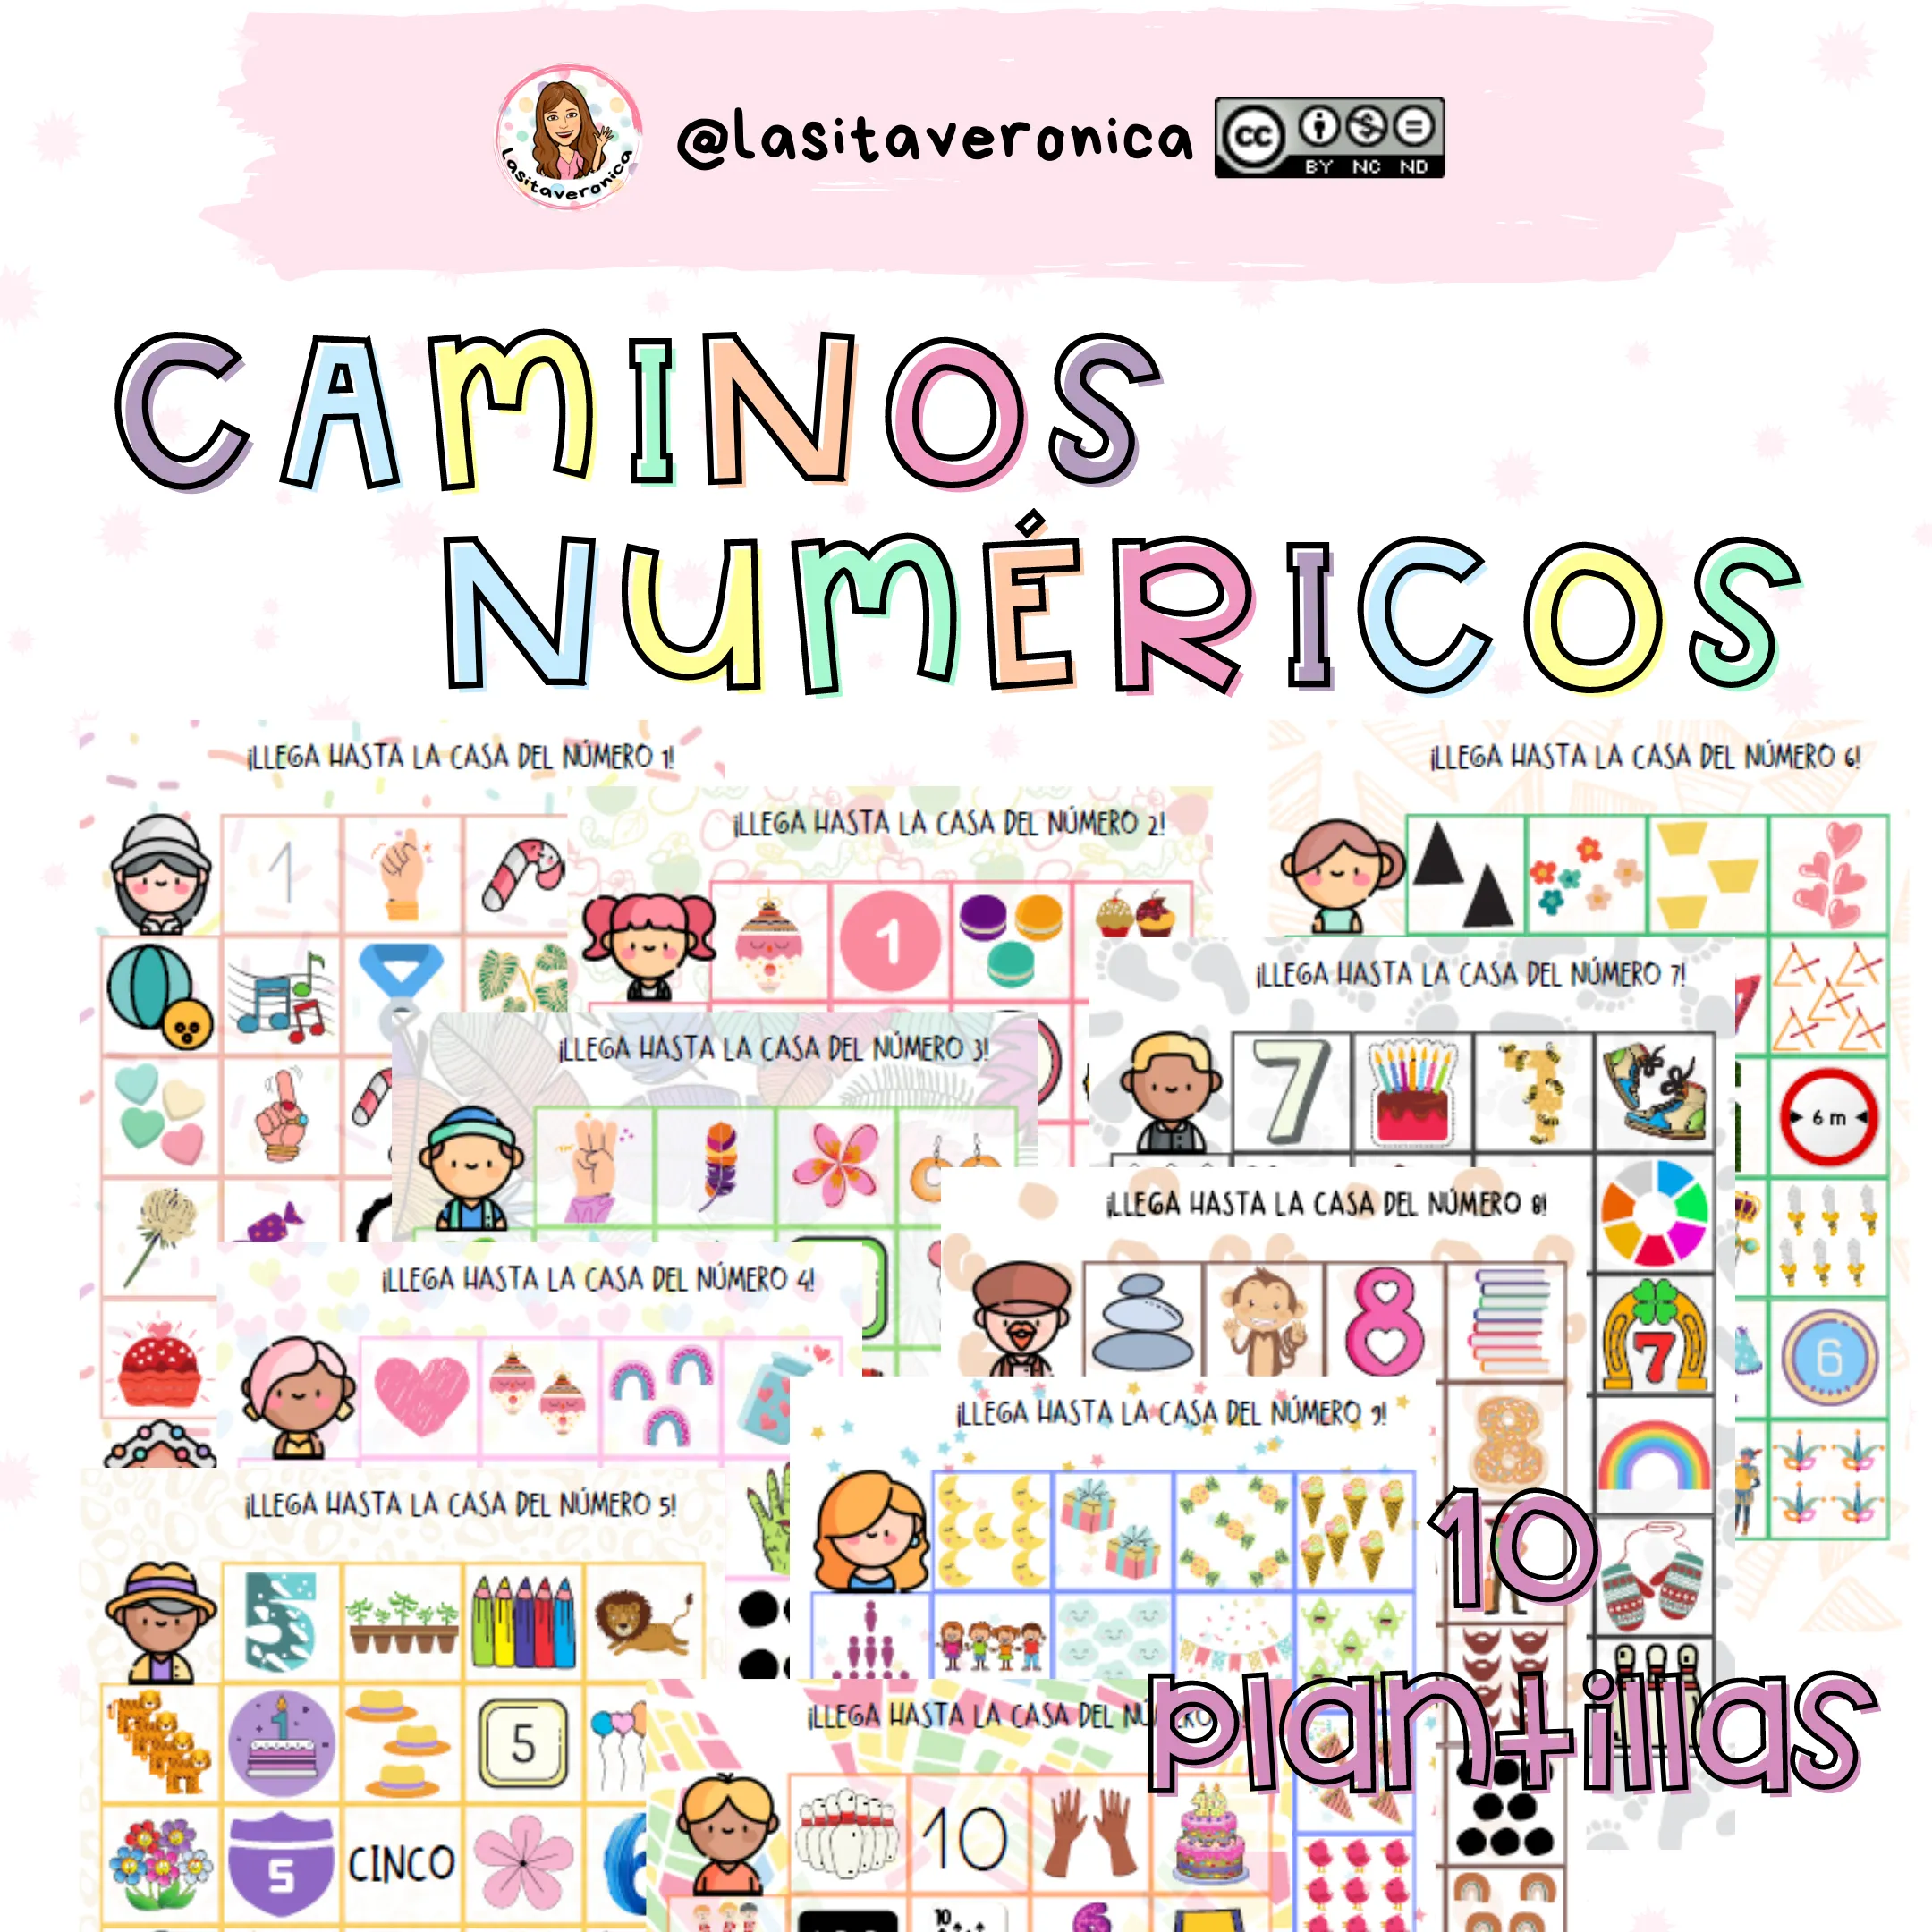 Caminos numéricos / Numbers mazes